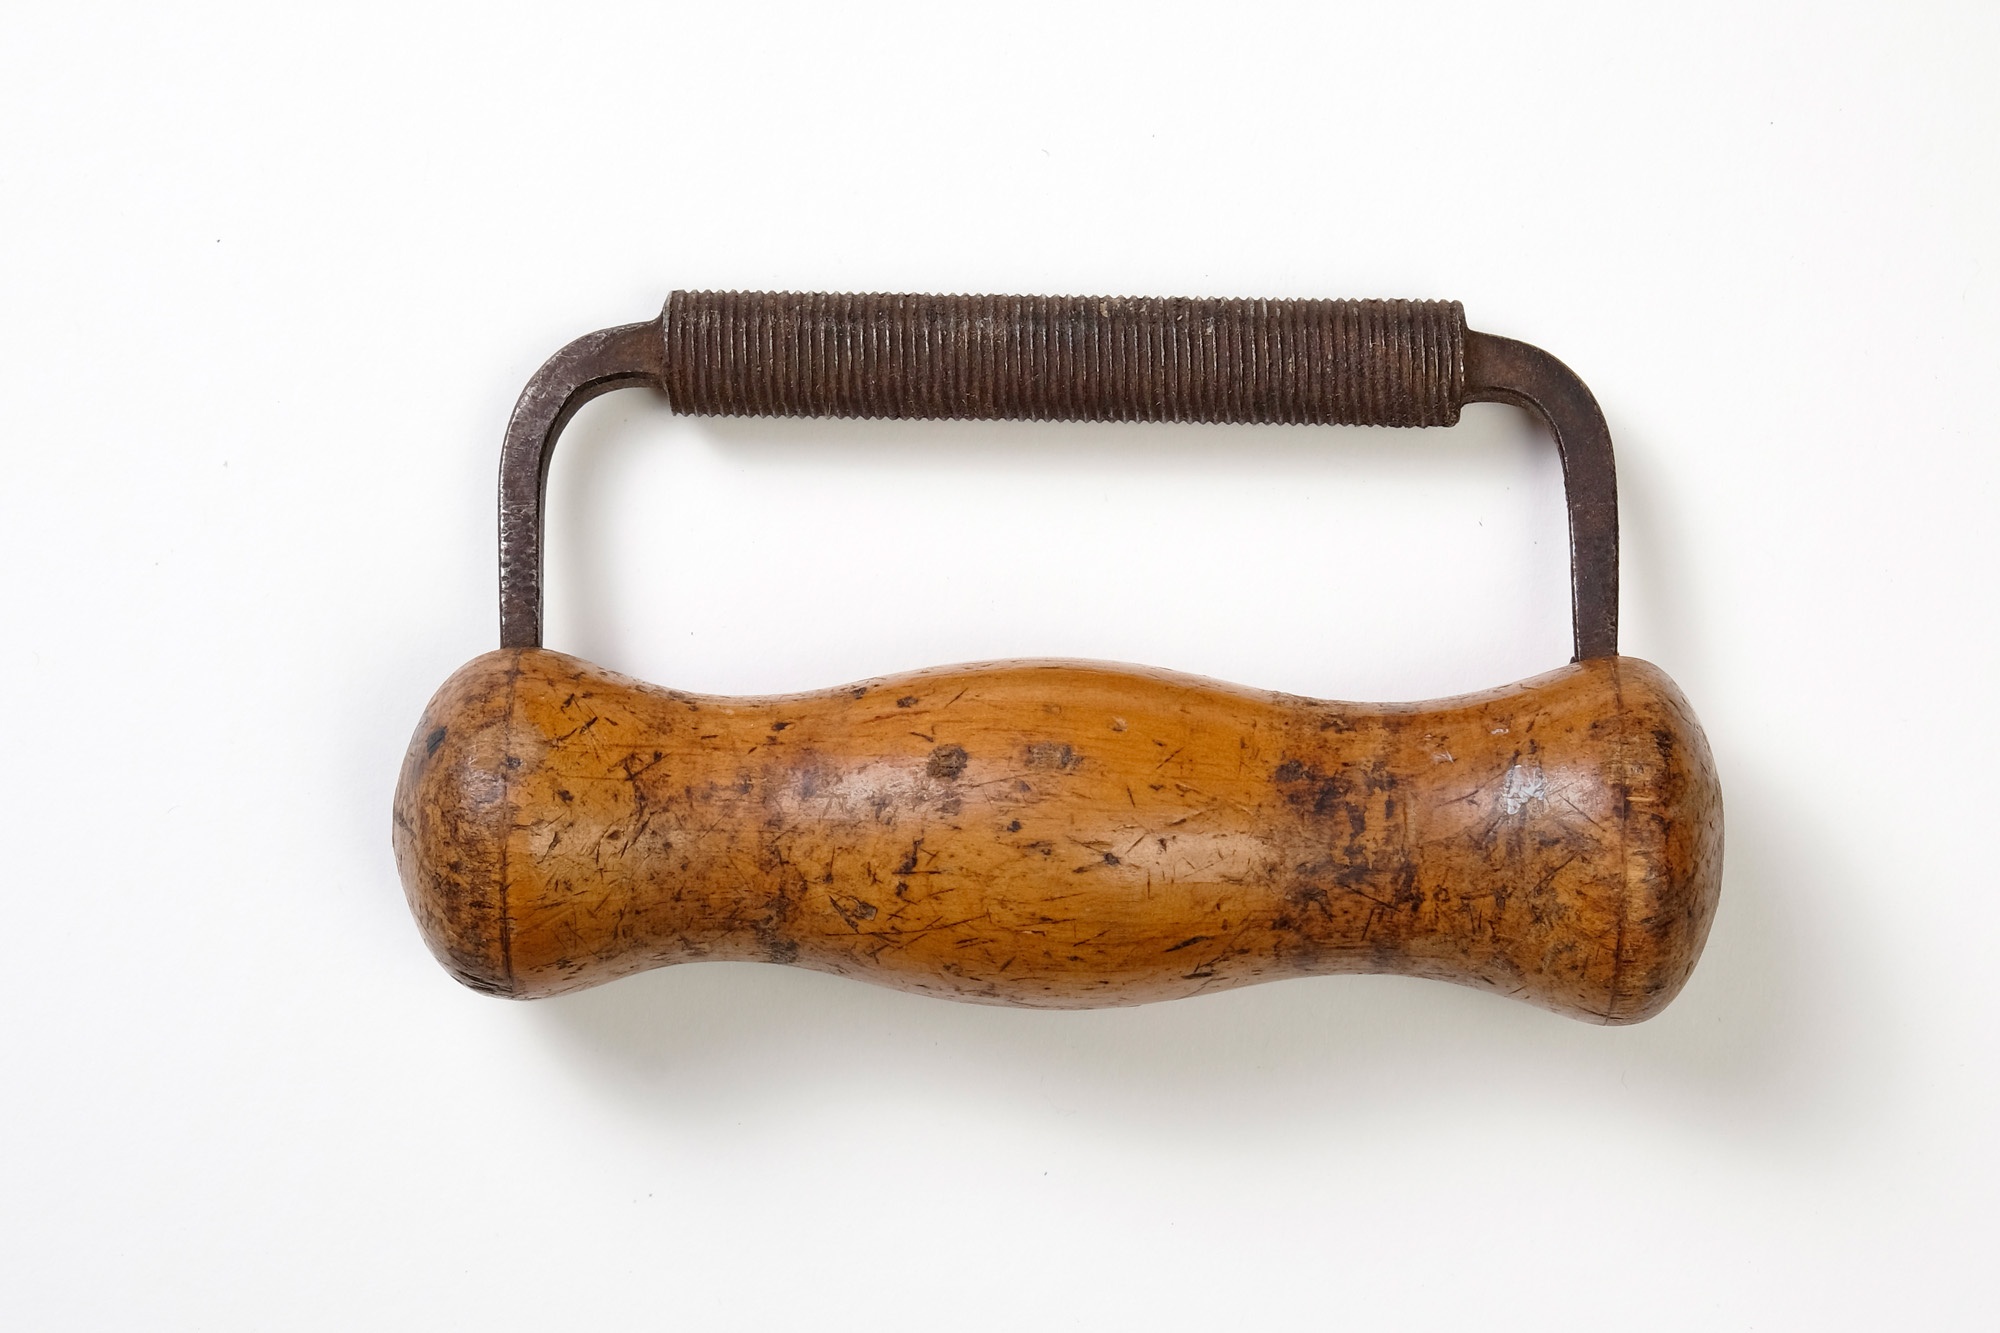 Werkzeug zum Ledergerben (Wegemuseum CC BY-SA)